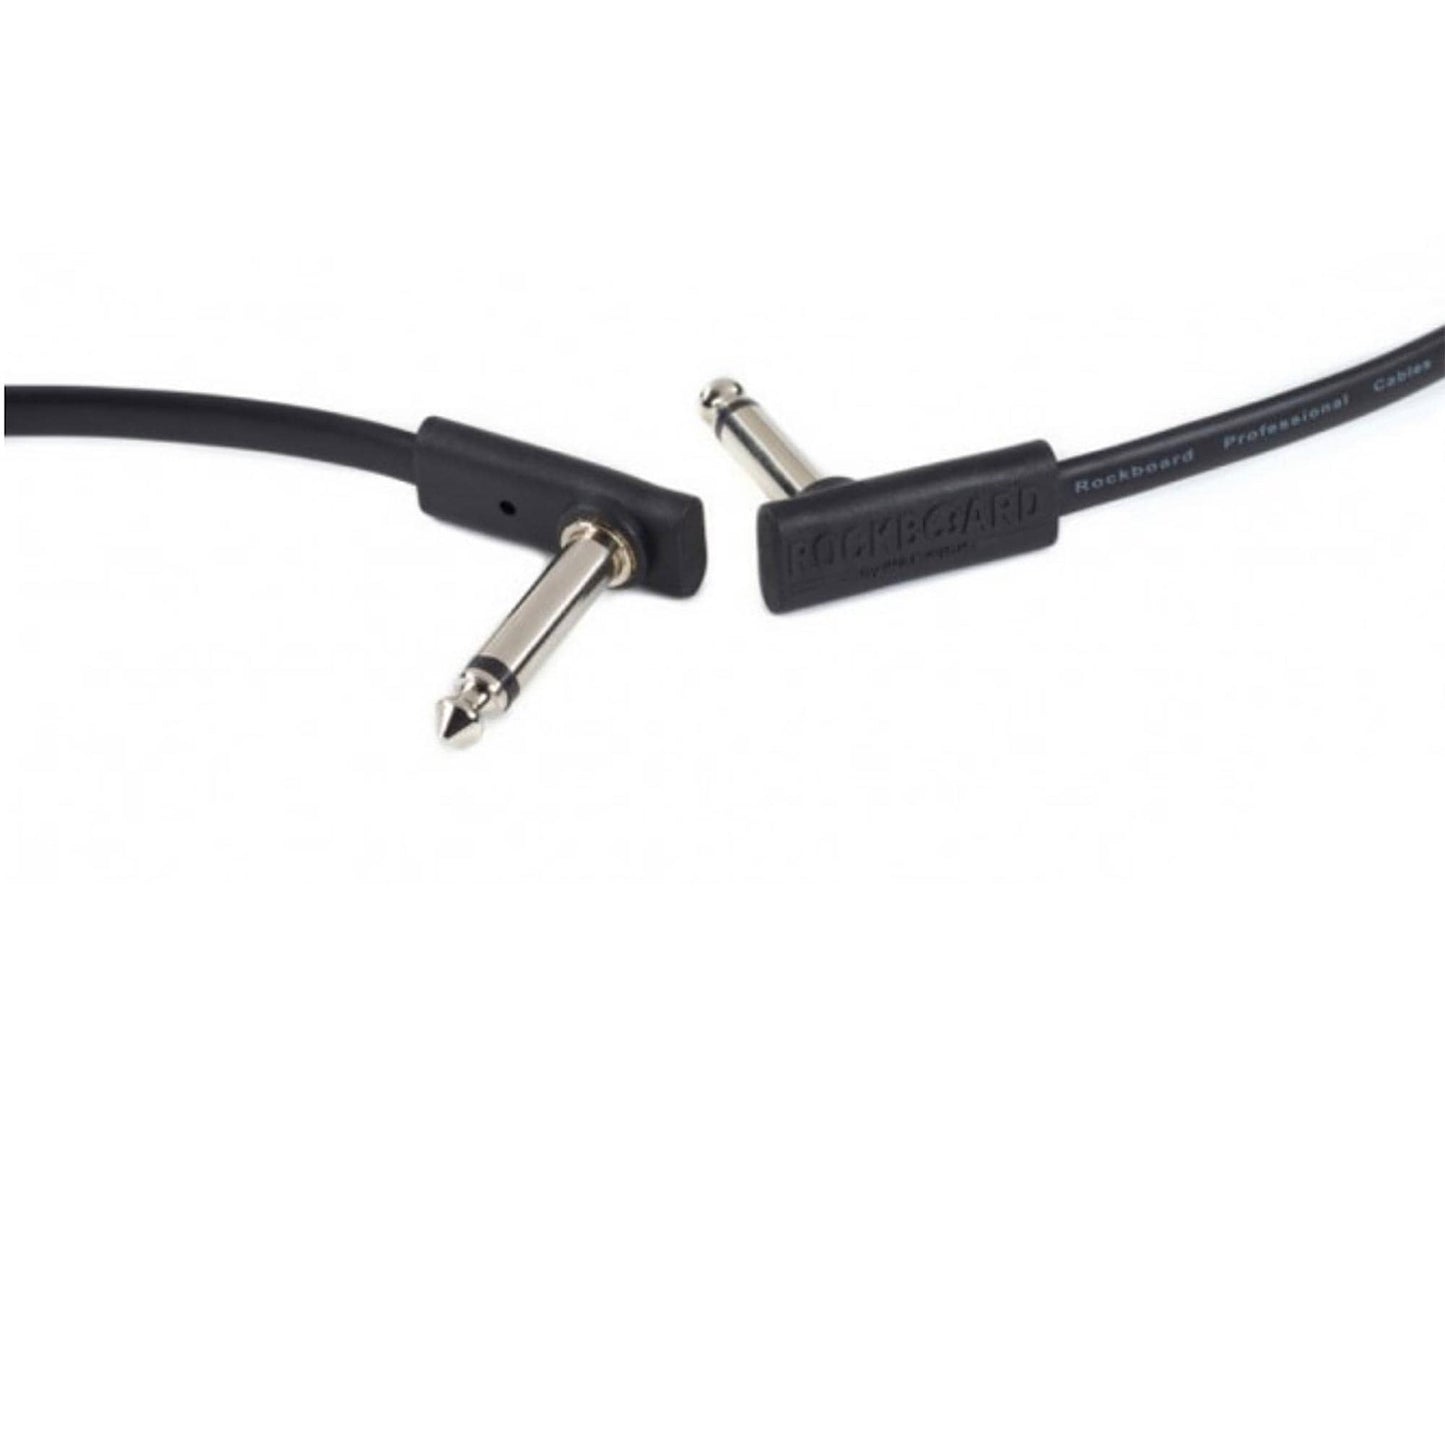 RockGear RockBoard Flat Patch Cable Black 10cm (3.94") Accessories / Cables